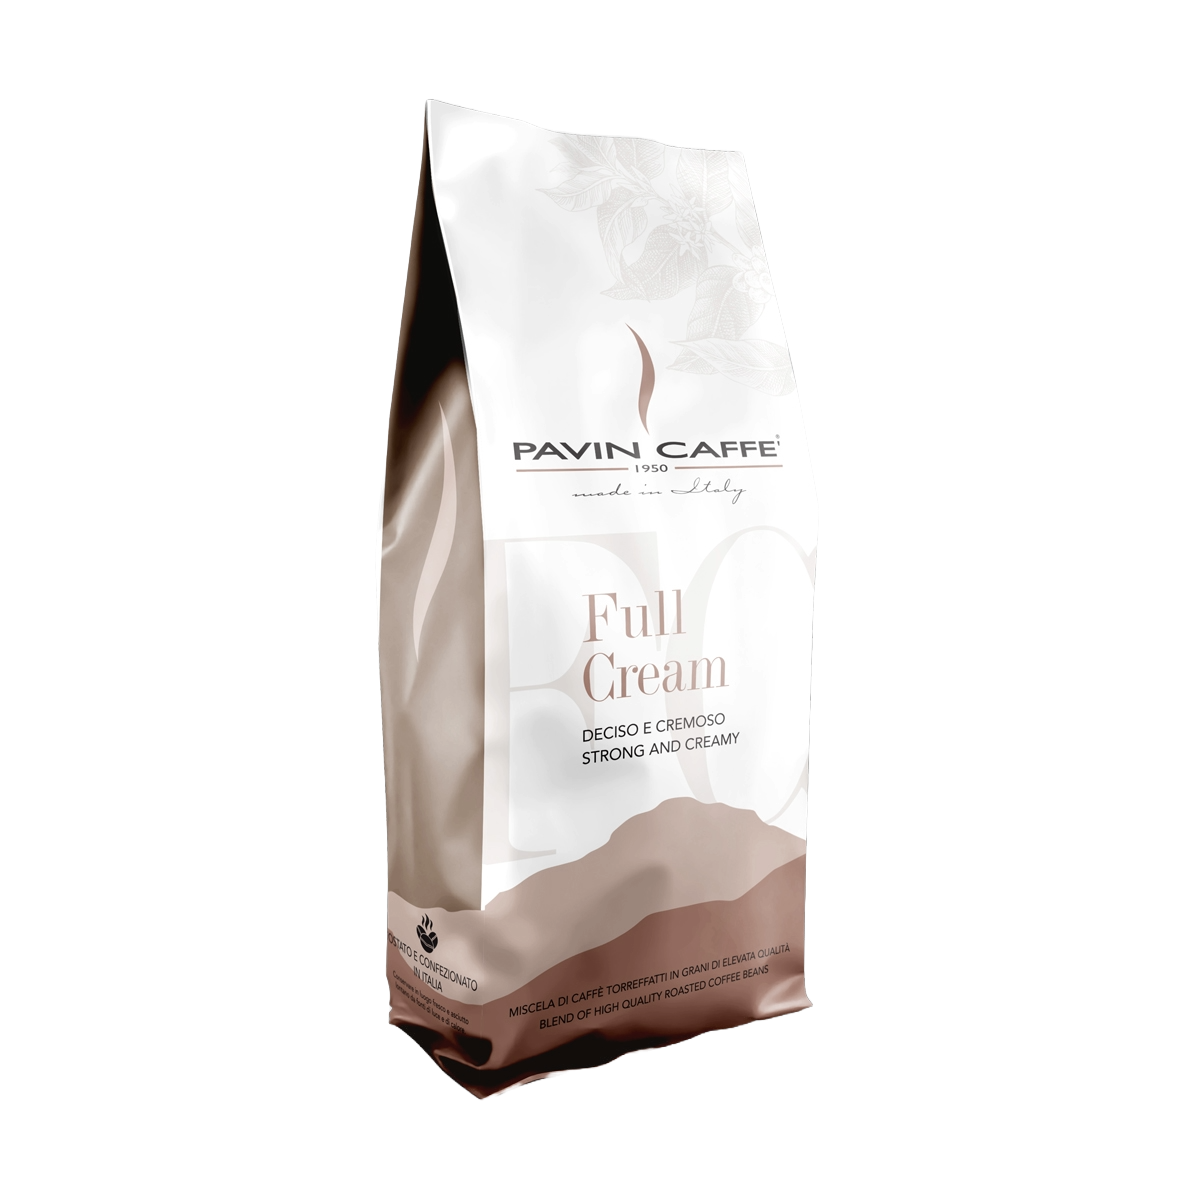 PAVIN CAFFE - FULL CREAM 1 Kg - Coffee Beans